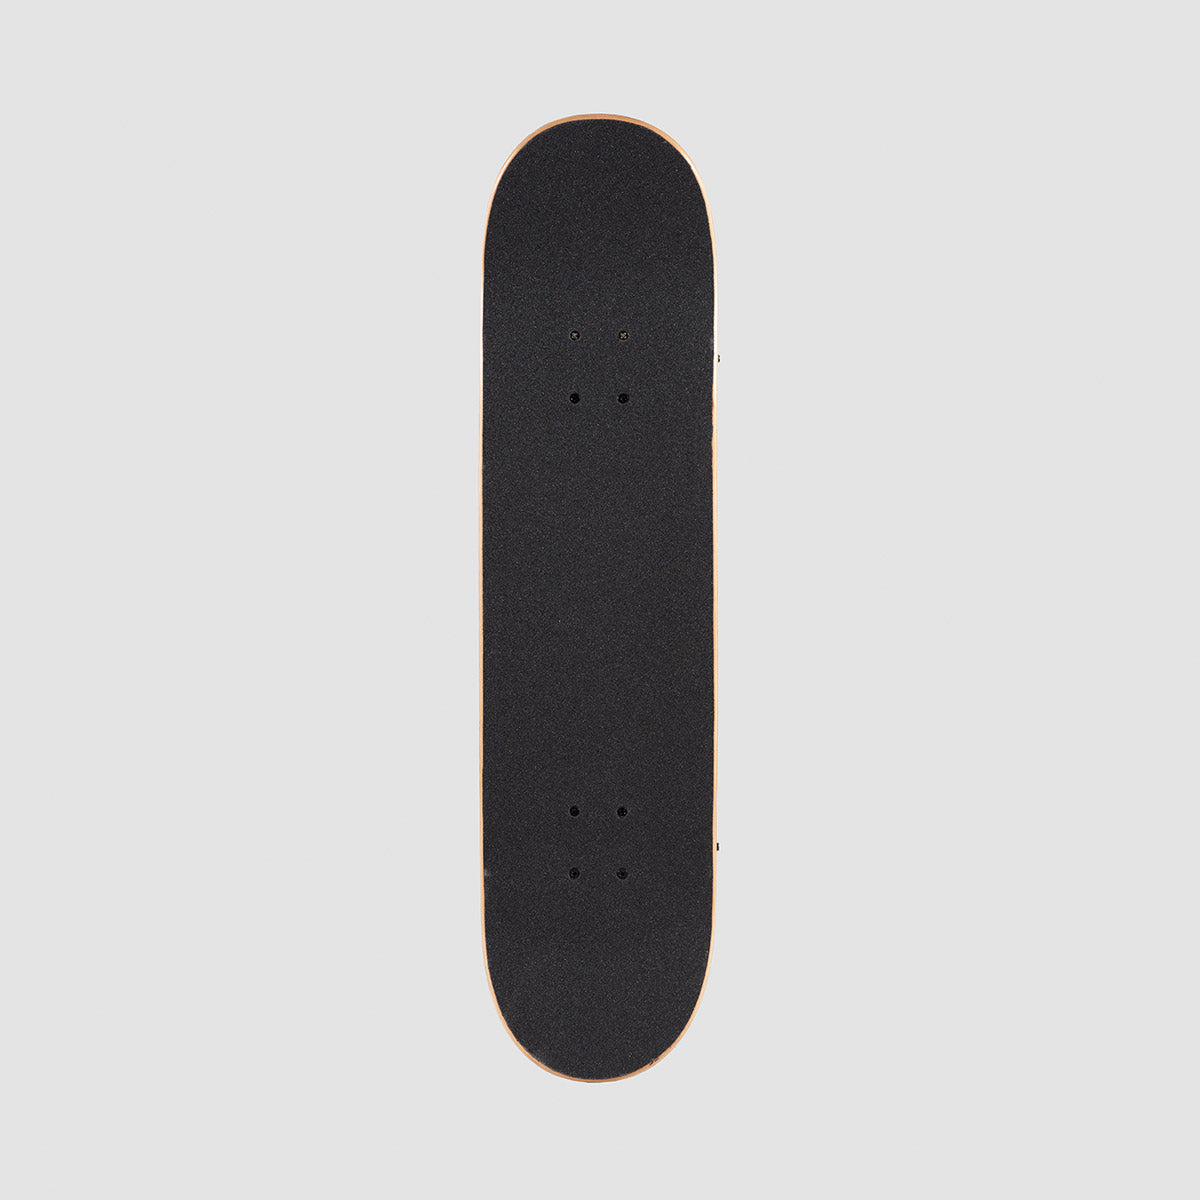 Enuff Logo Stain Skateboard Teal - 8"